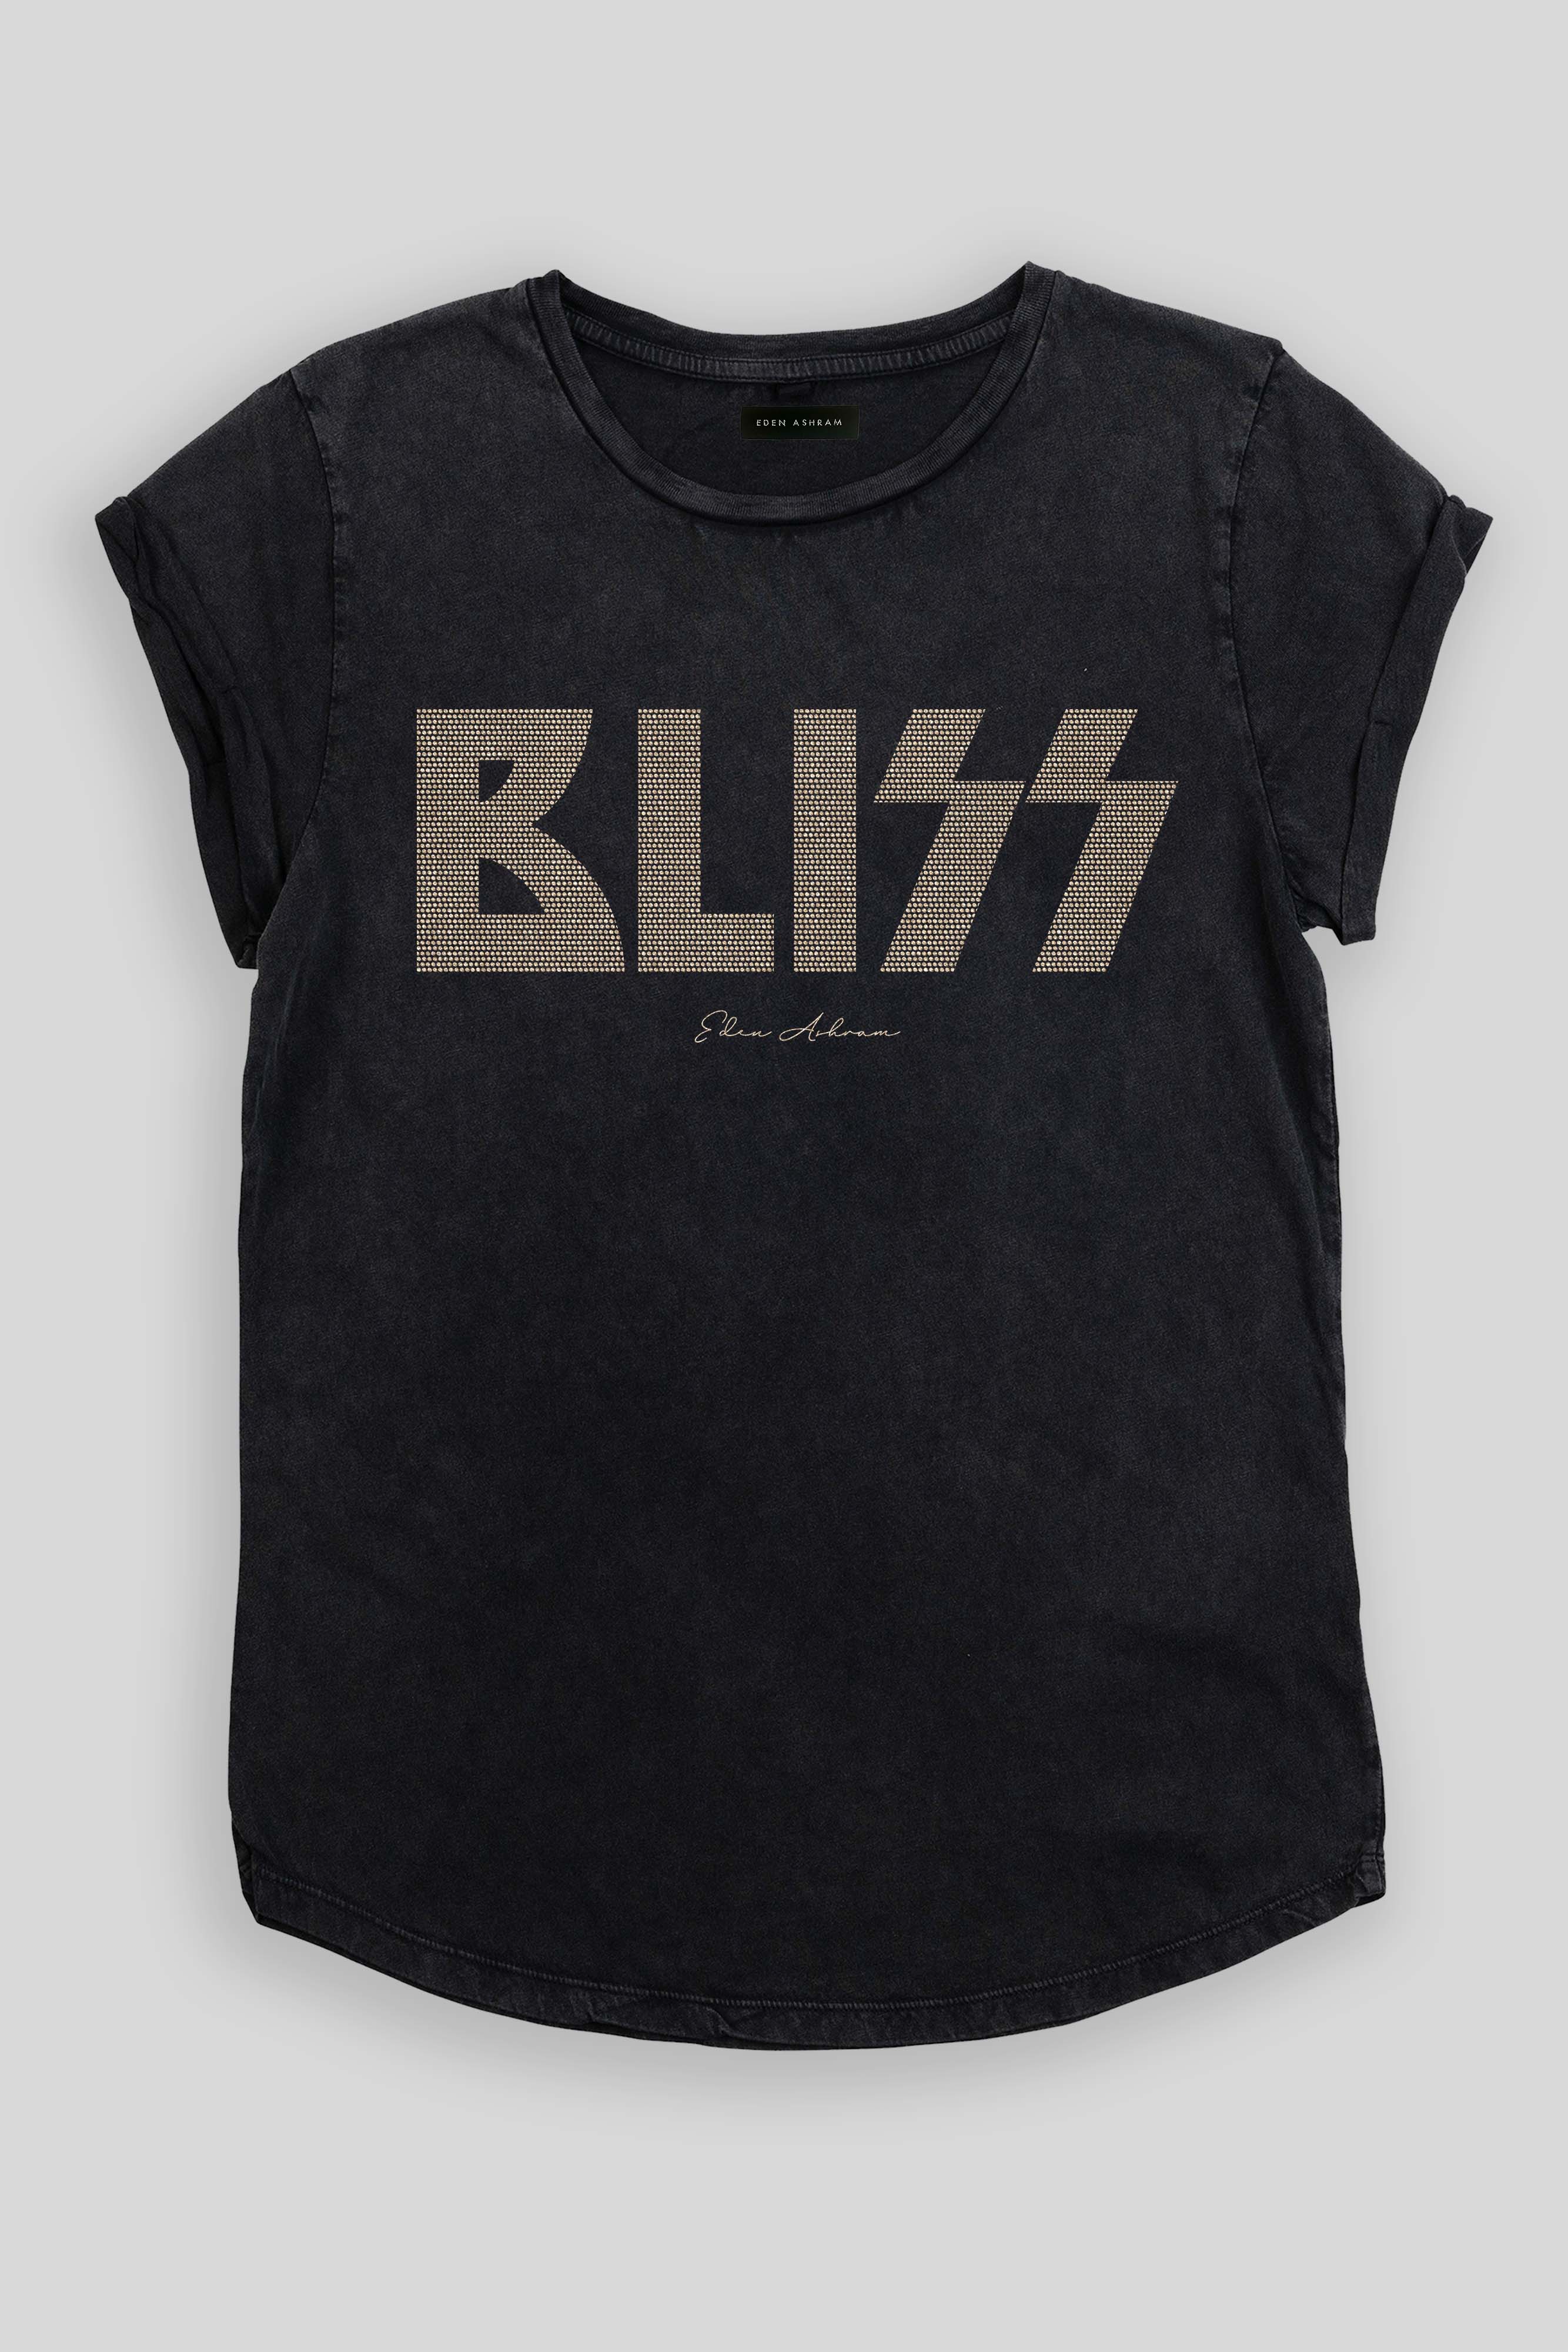 EDEN ASHRAM BLISS Rolled Sleeve Tour T-Shirt Stonewash Black | Gold